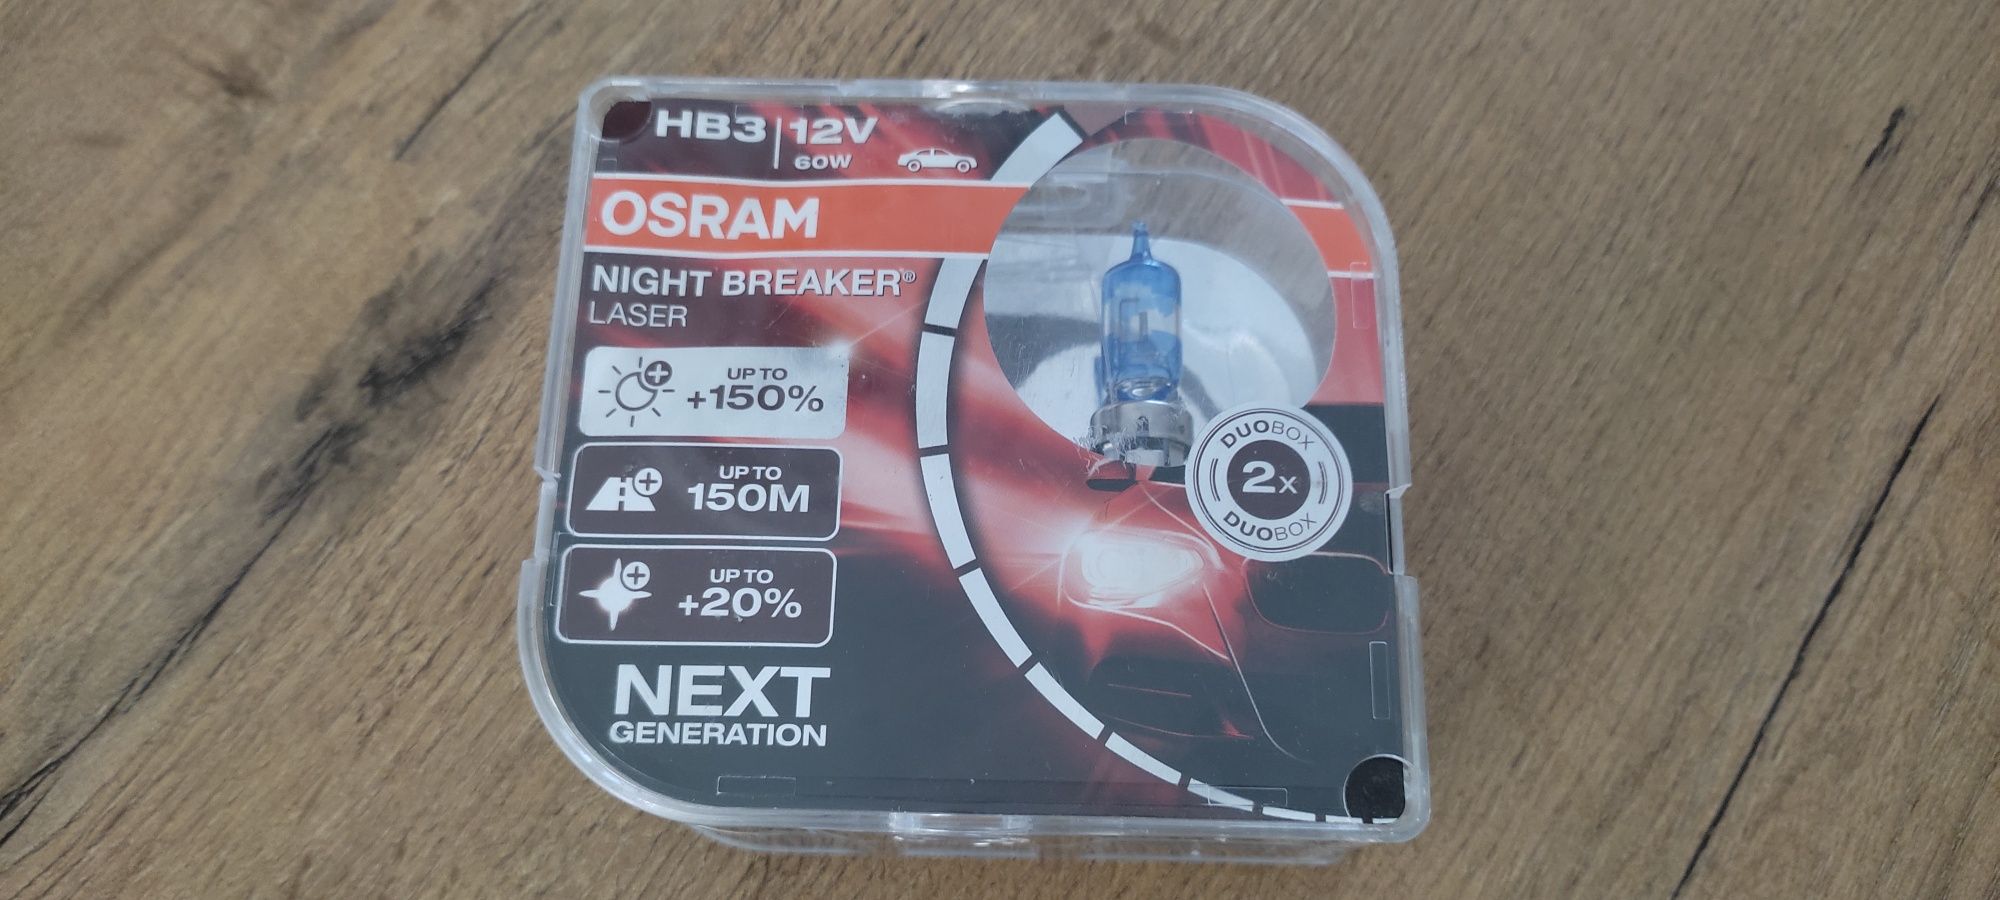 Żarówki OSRAM Night Breaker Laser +150% HB3 12V 60W (2 szt.)